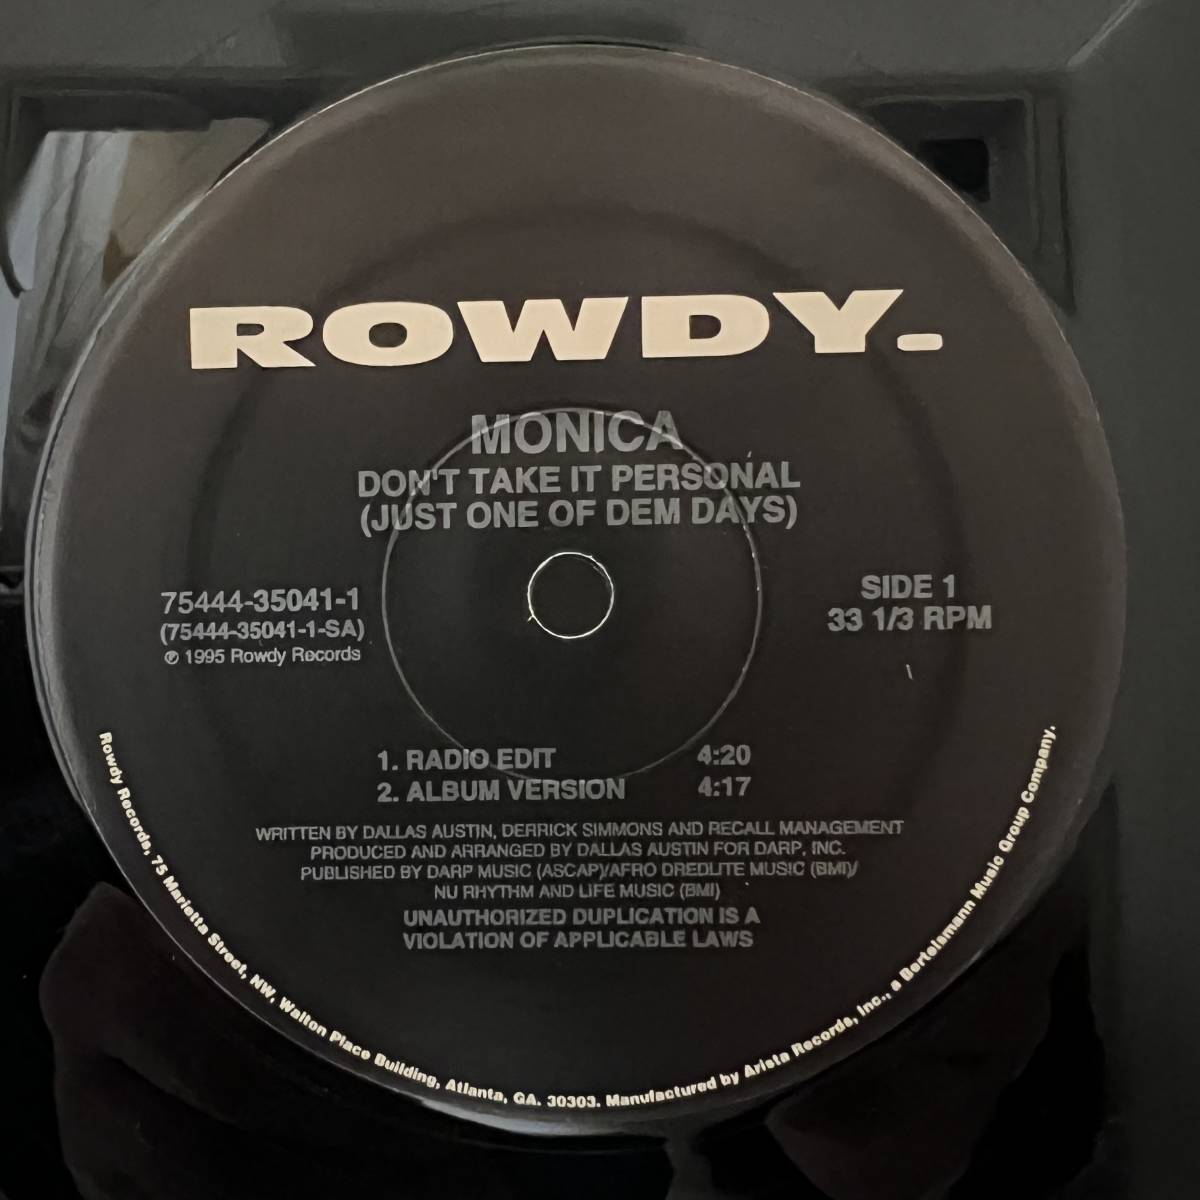 R&B 12 - Monica - Don't Take It Personal (Just One Of Dem Days) - Rowdy - VG+ - シュリンク付_画像3